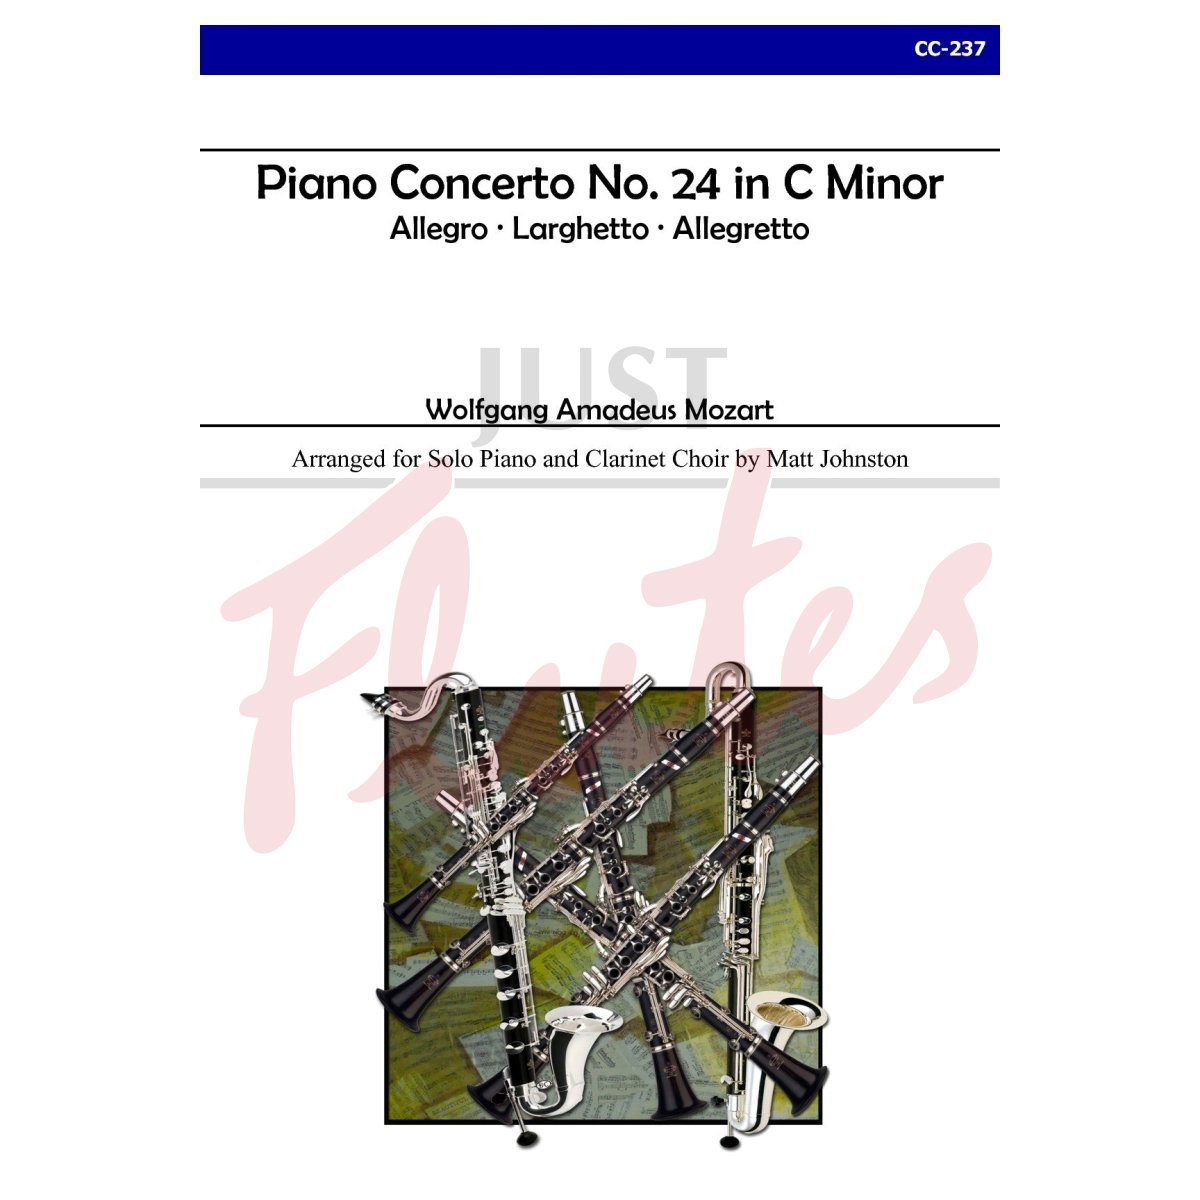 Piano Concerto No. 24 in C Minor for Solo Piano and Clarinet Choir